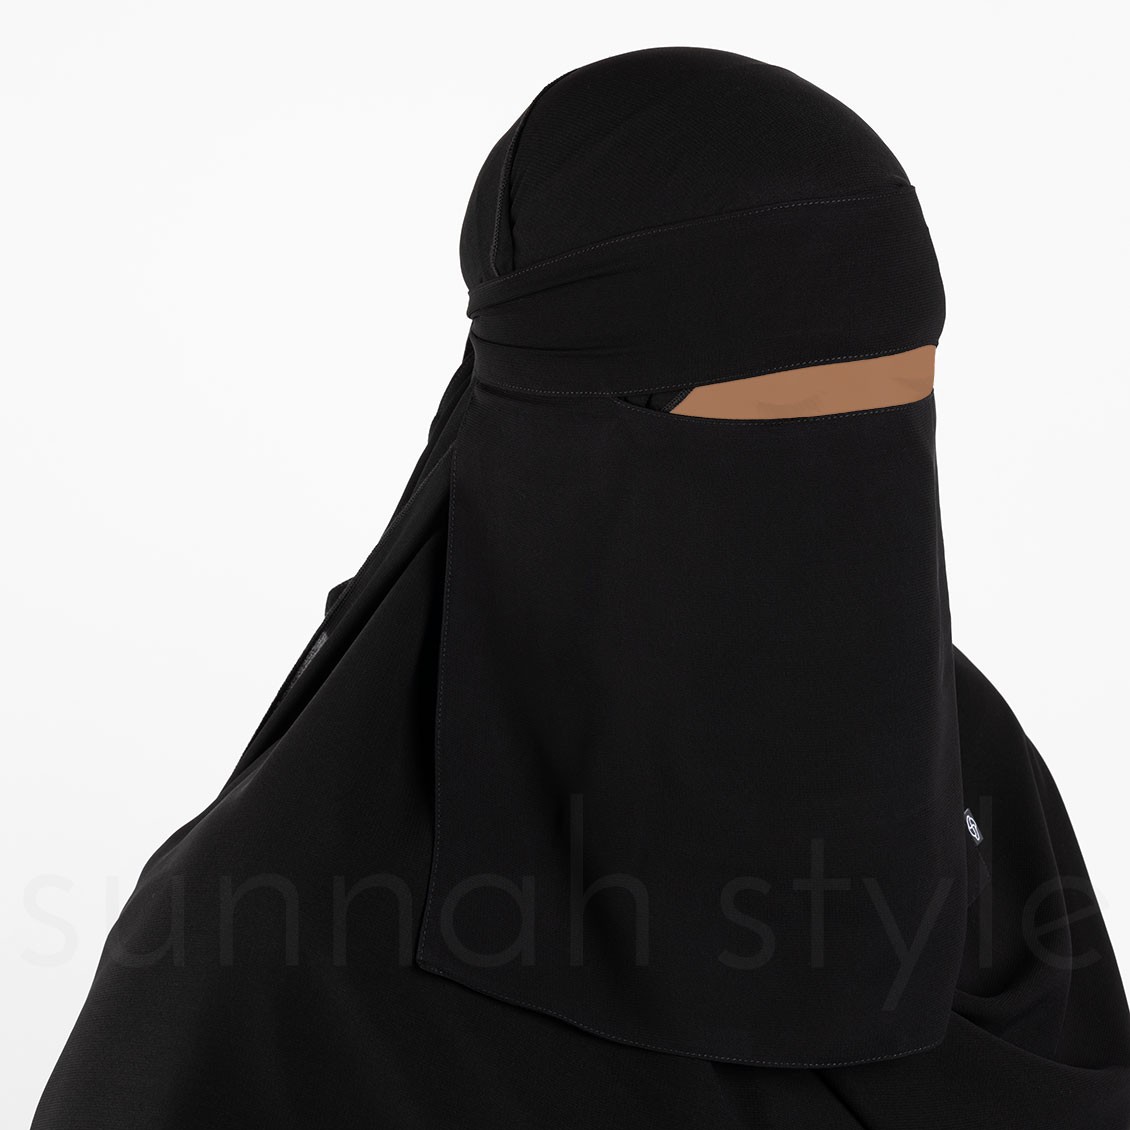 Sunnah Style Short One Layer Niqab Black